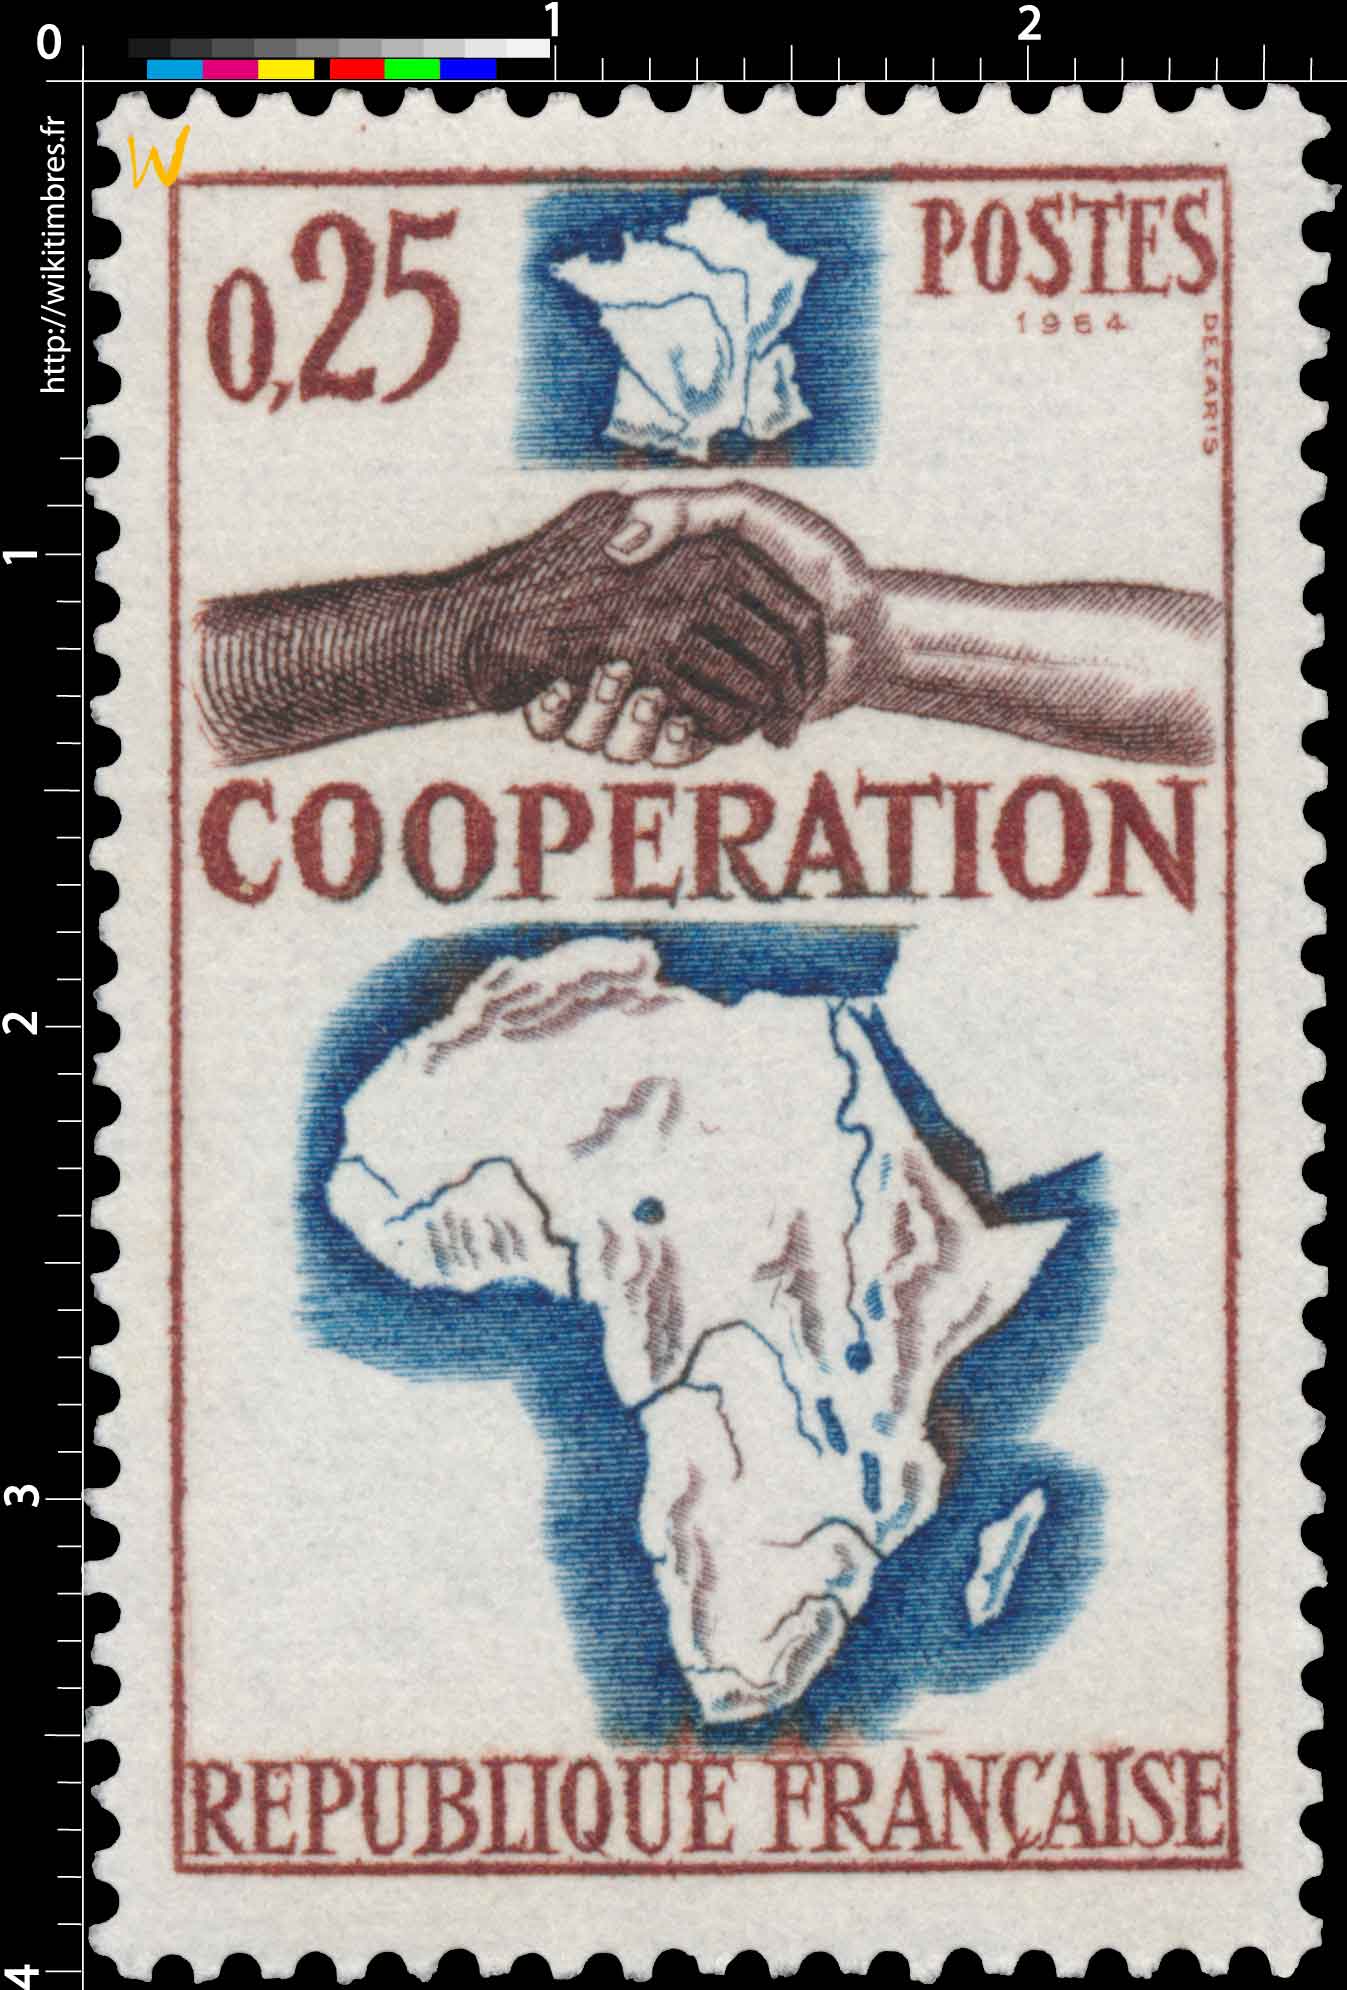 1964 COOPÉRATION